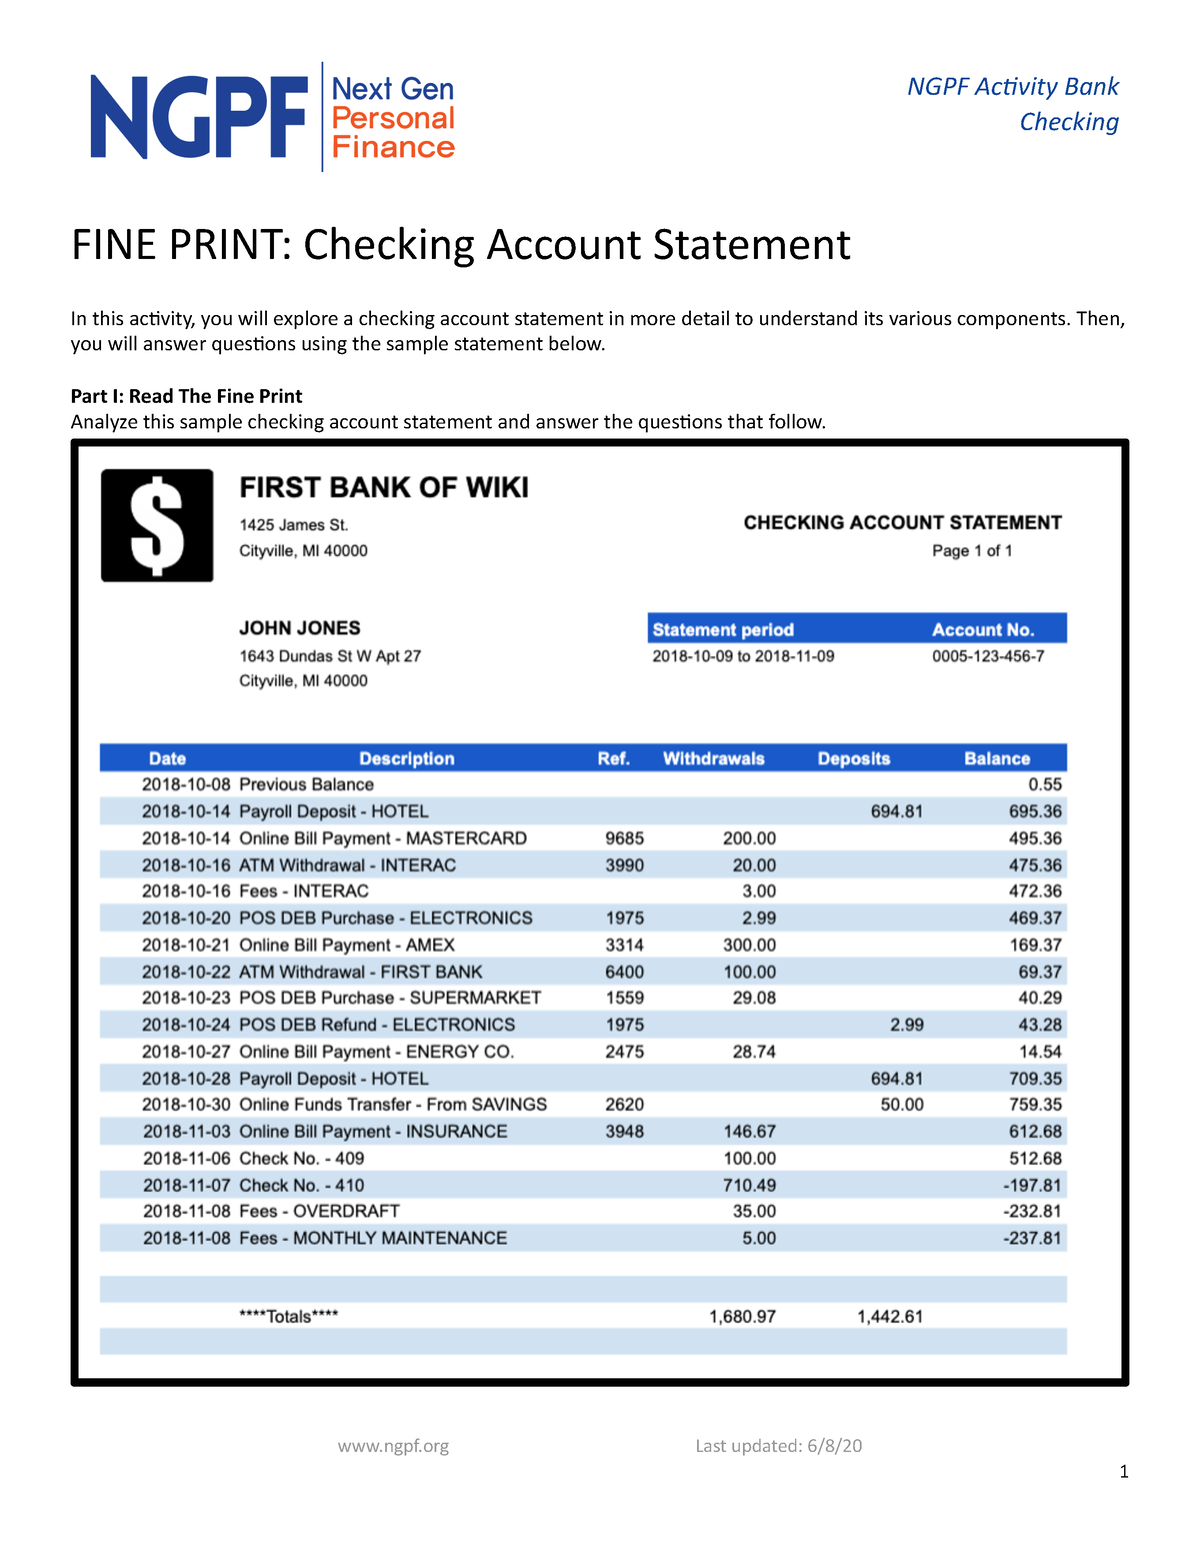 fine-print-checking-account-statement-answer-key